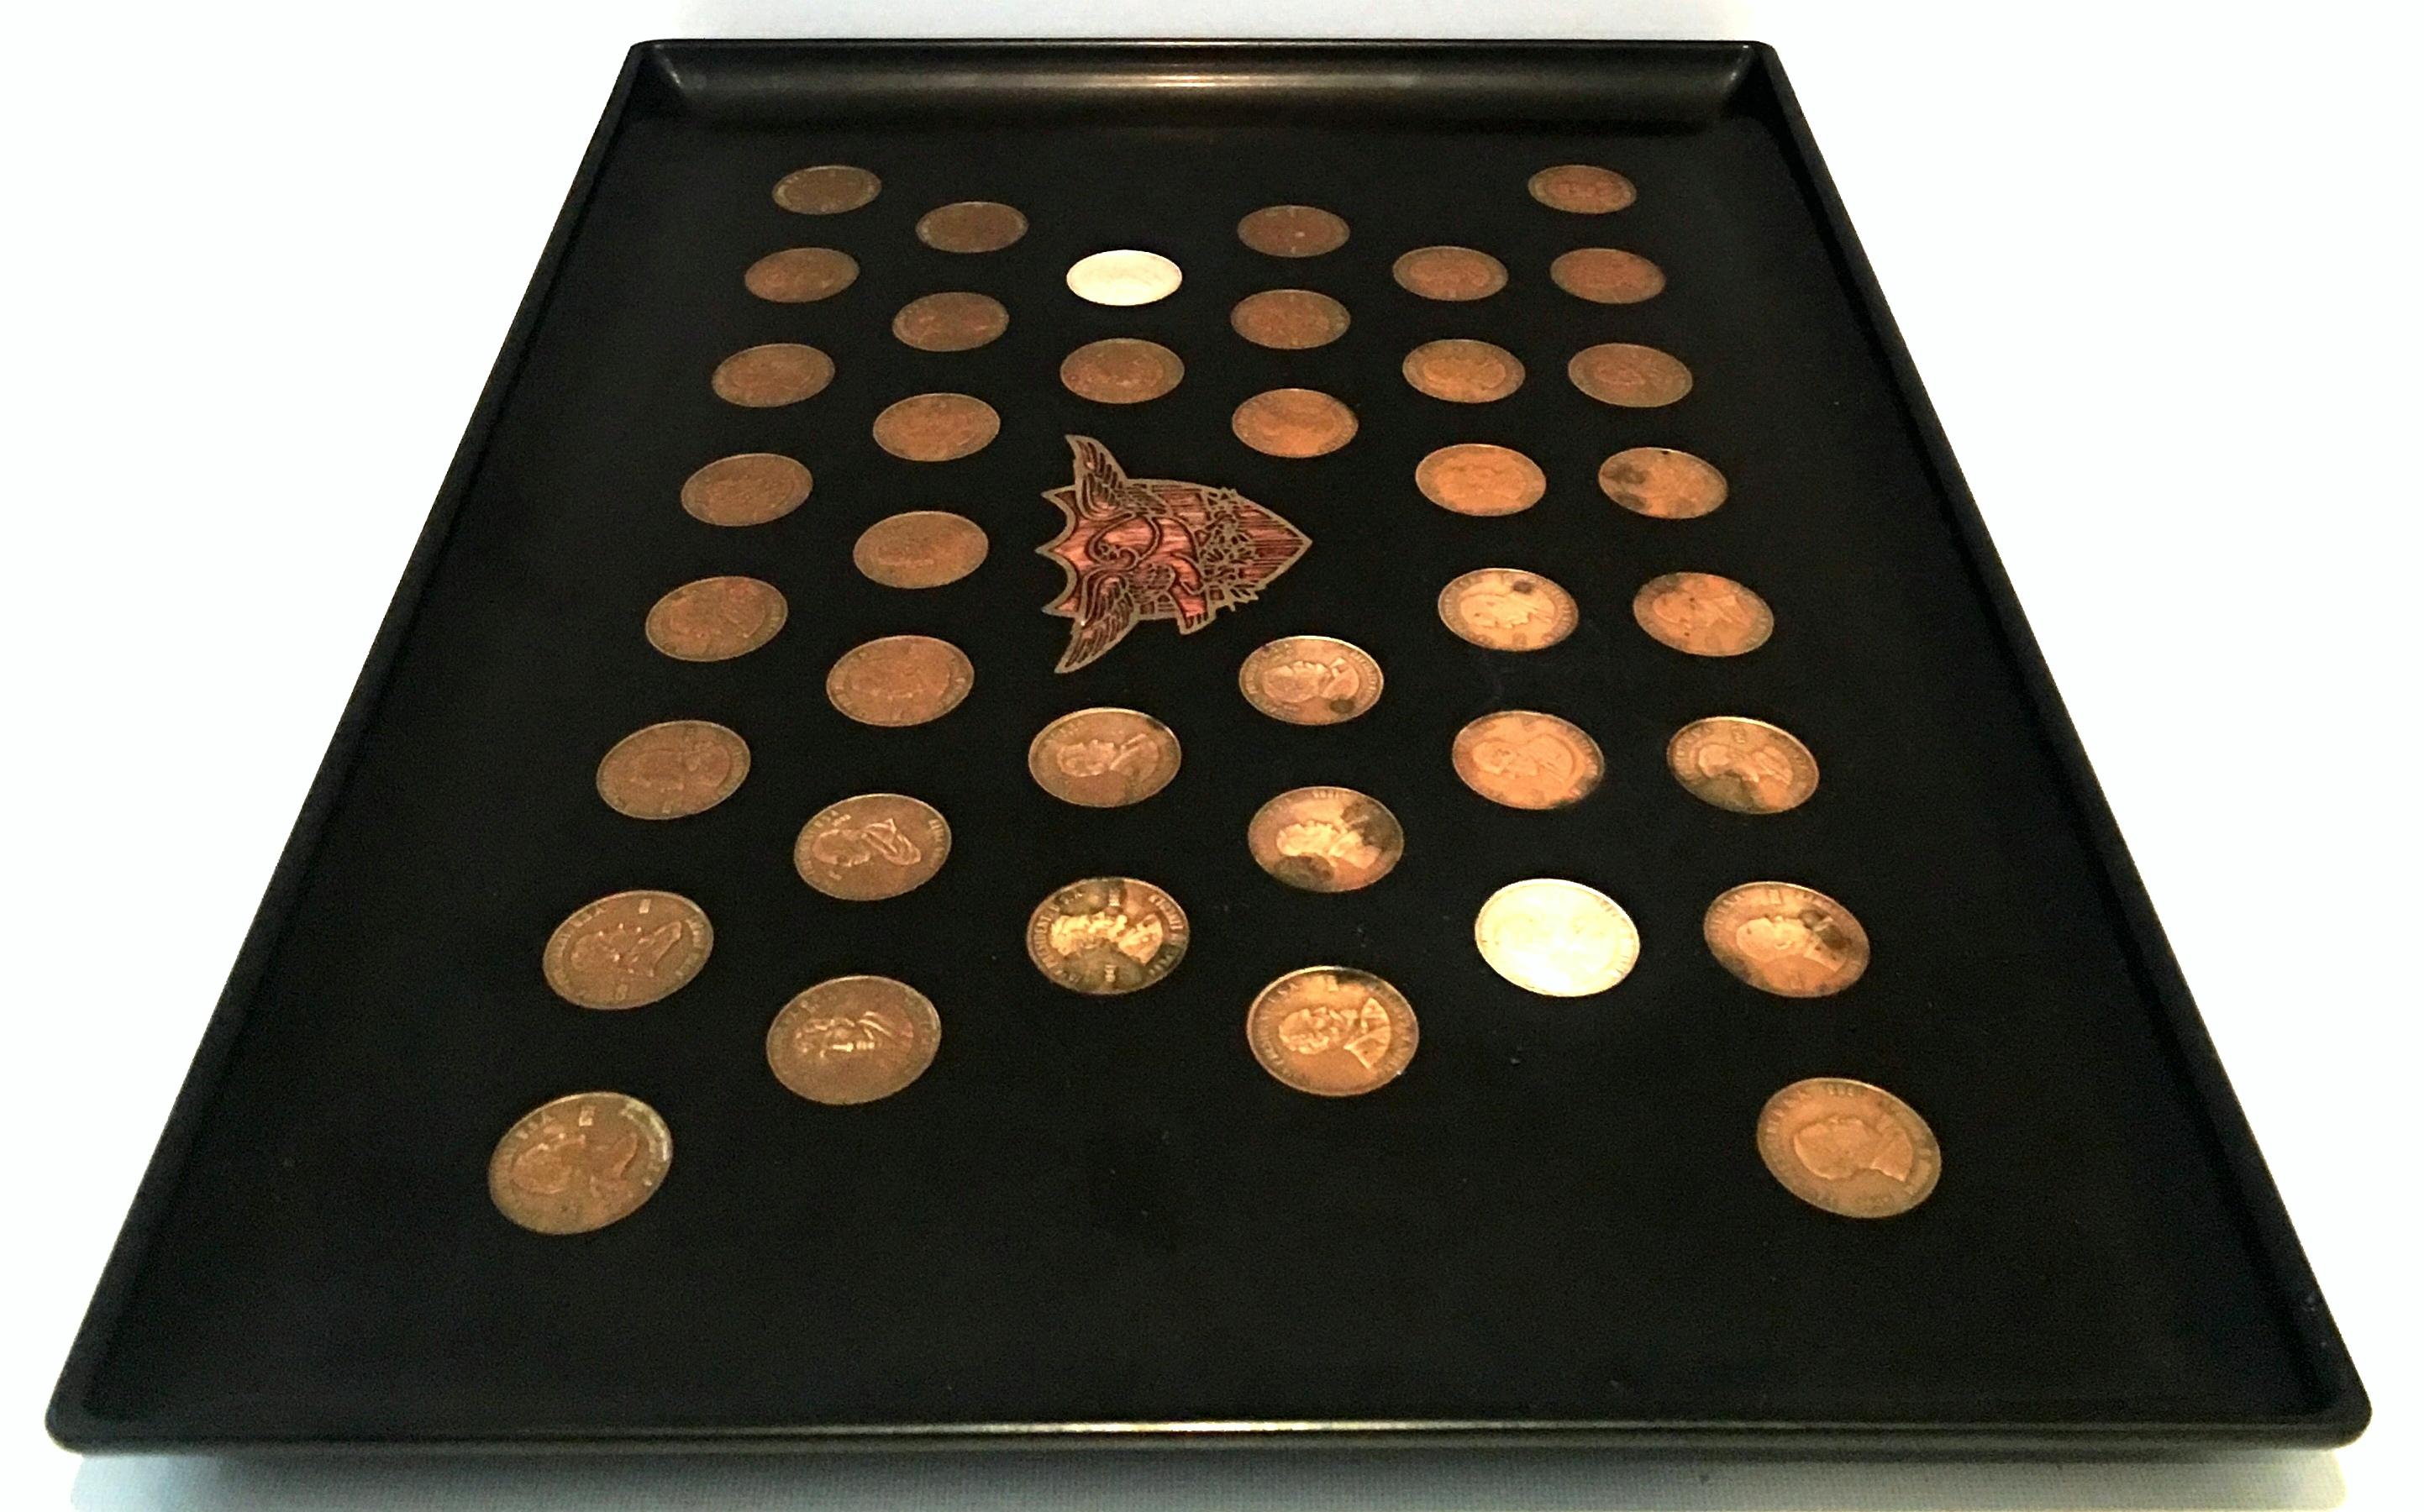 couroc presidential coin tray